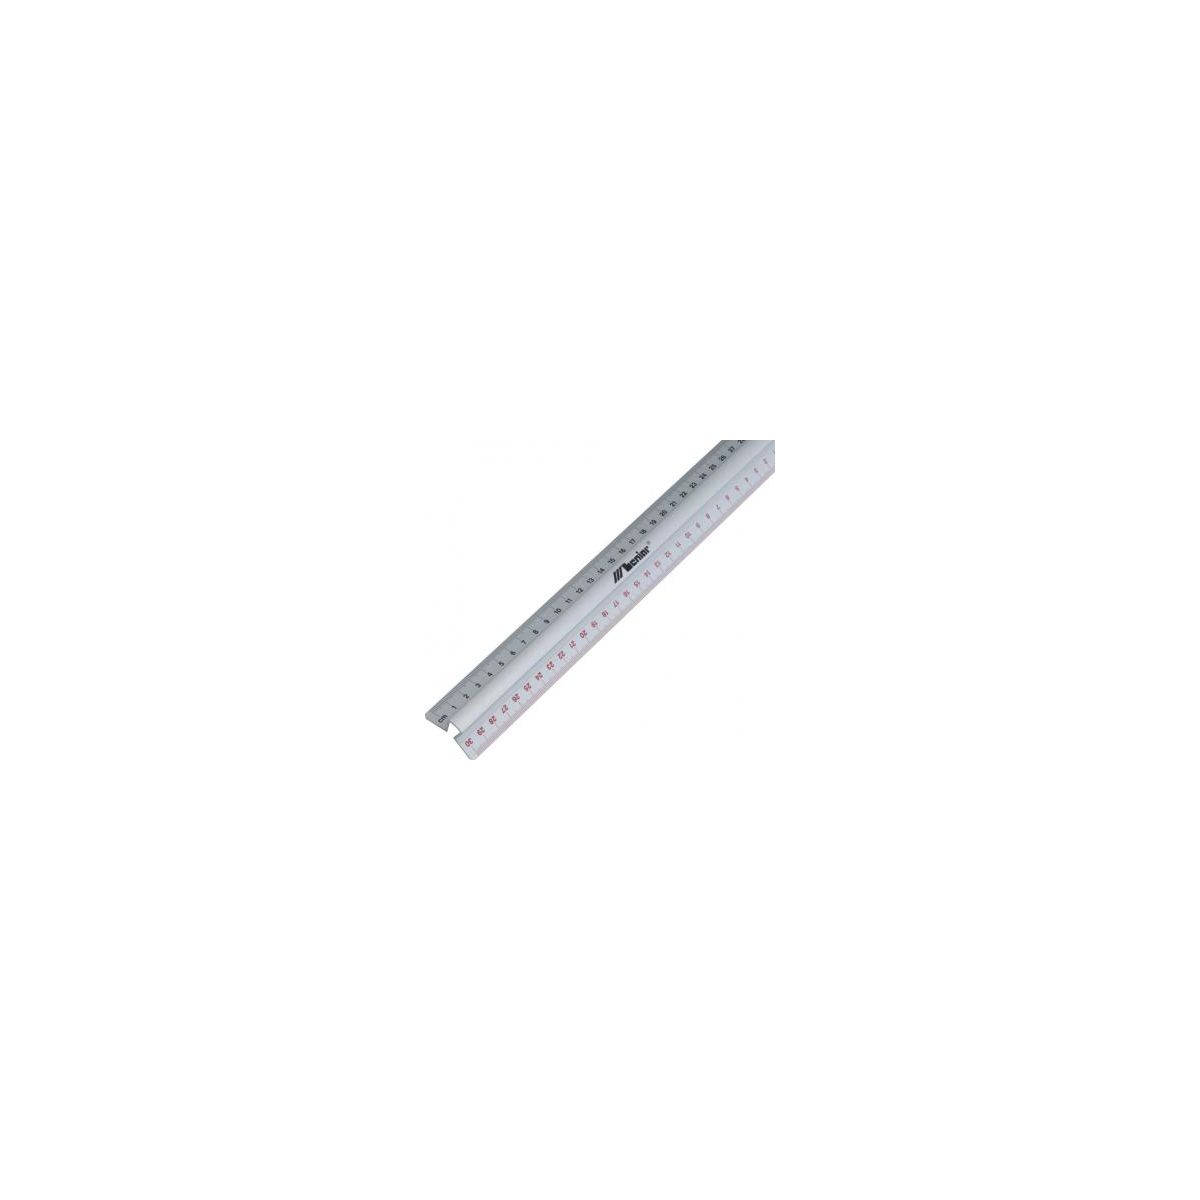 Linijka aluminiowa Leniar 100cm (30164)